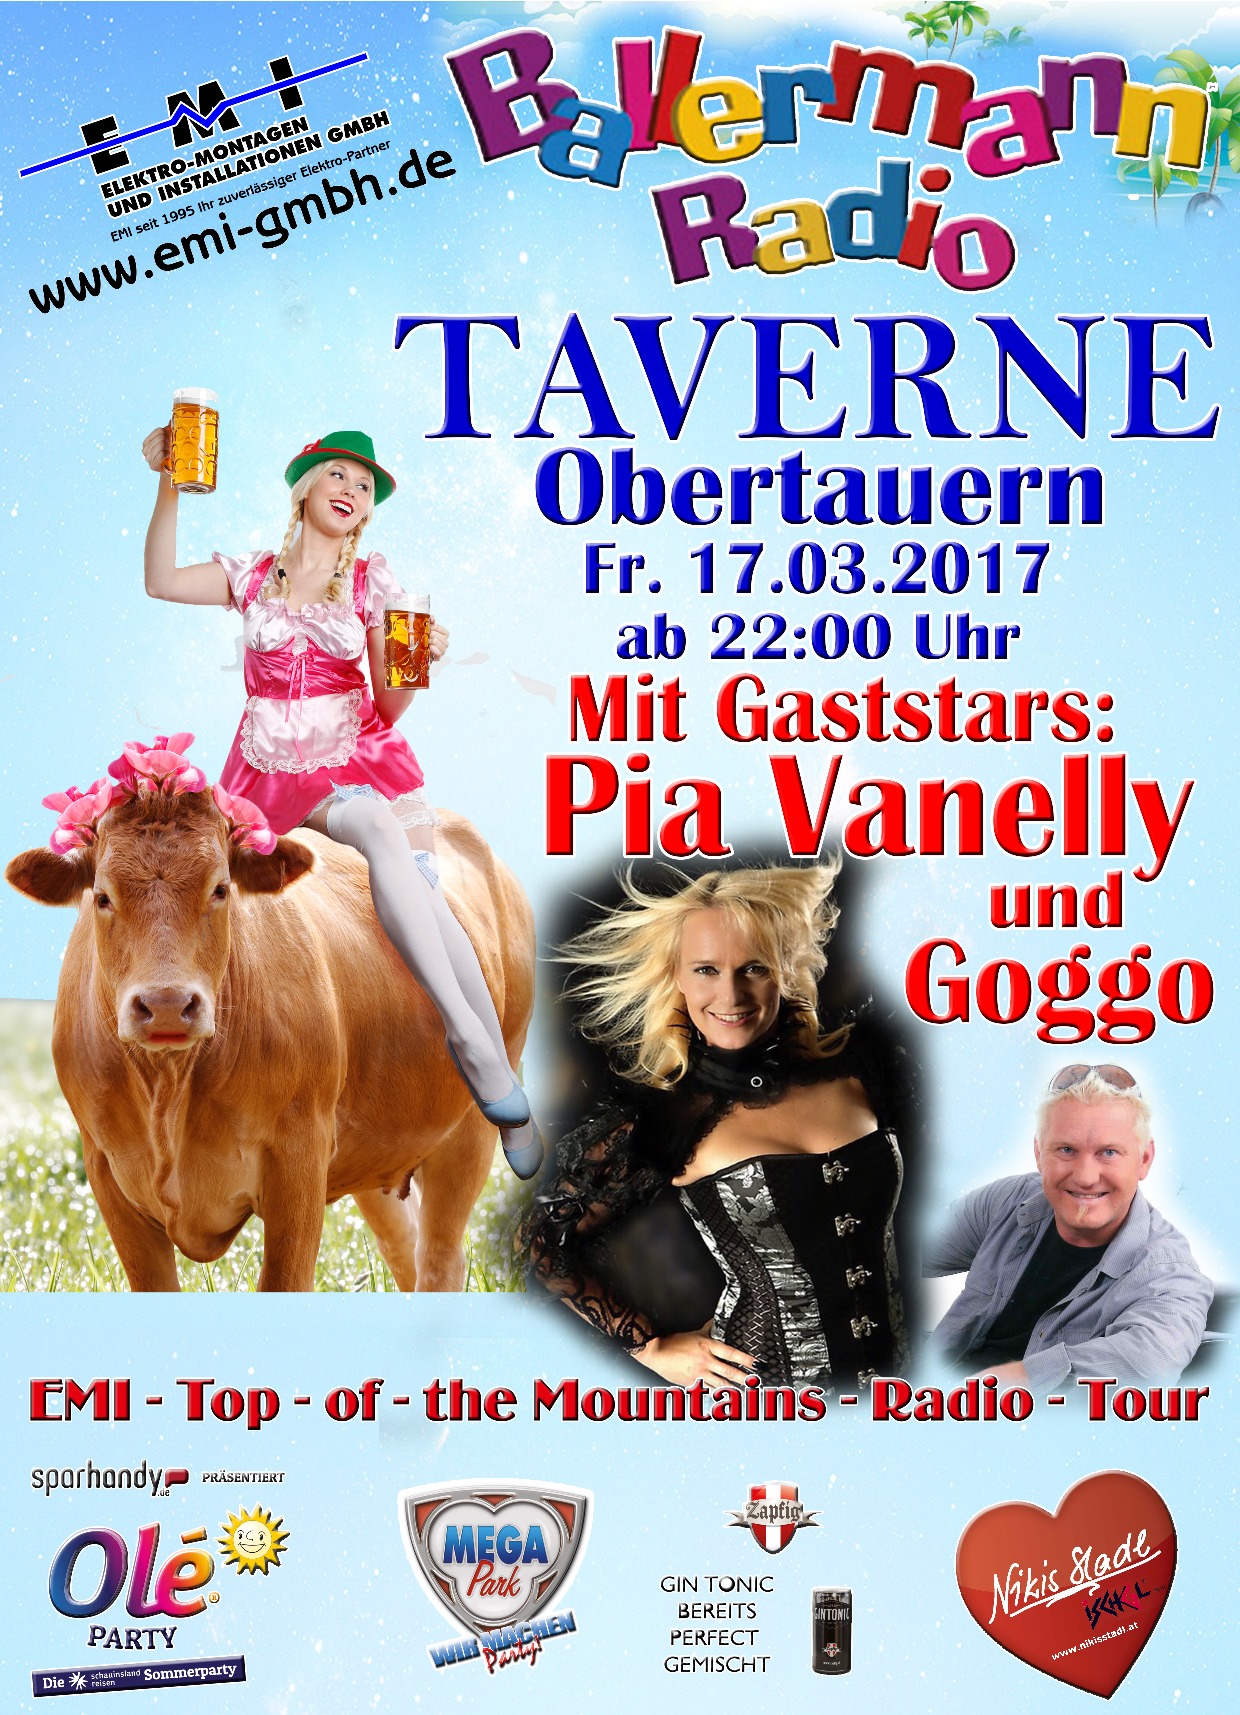 17.03.2017 Taverne Obertauern